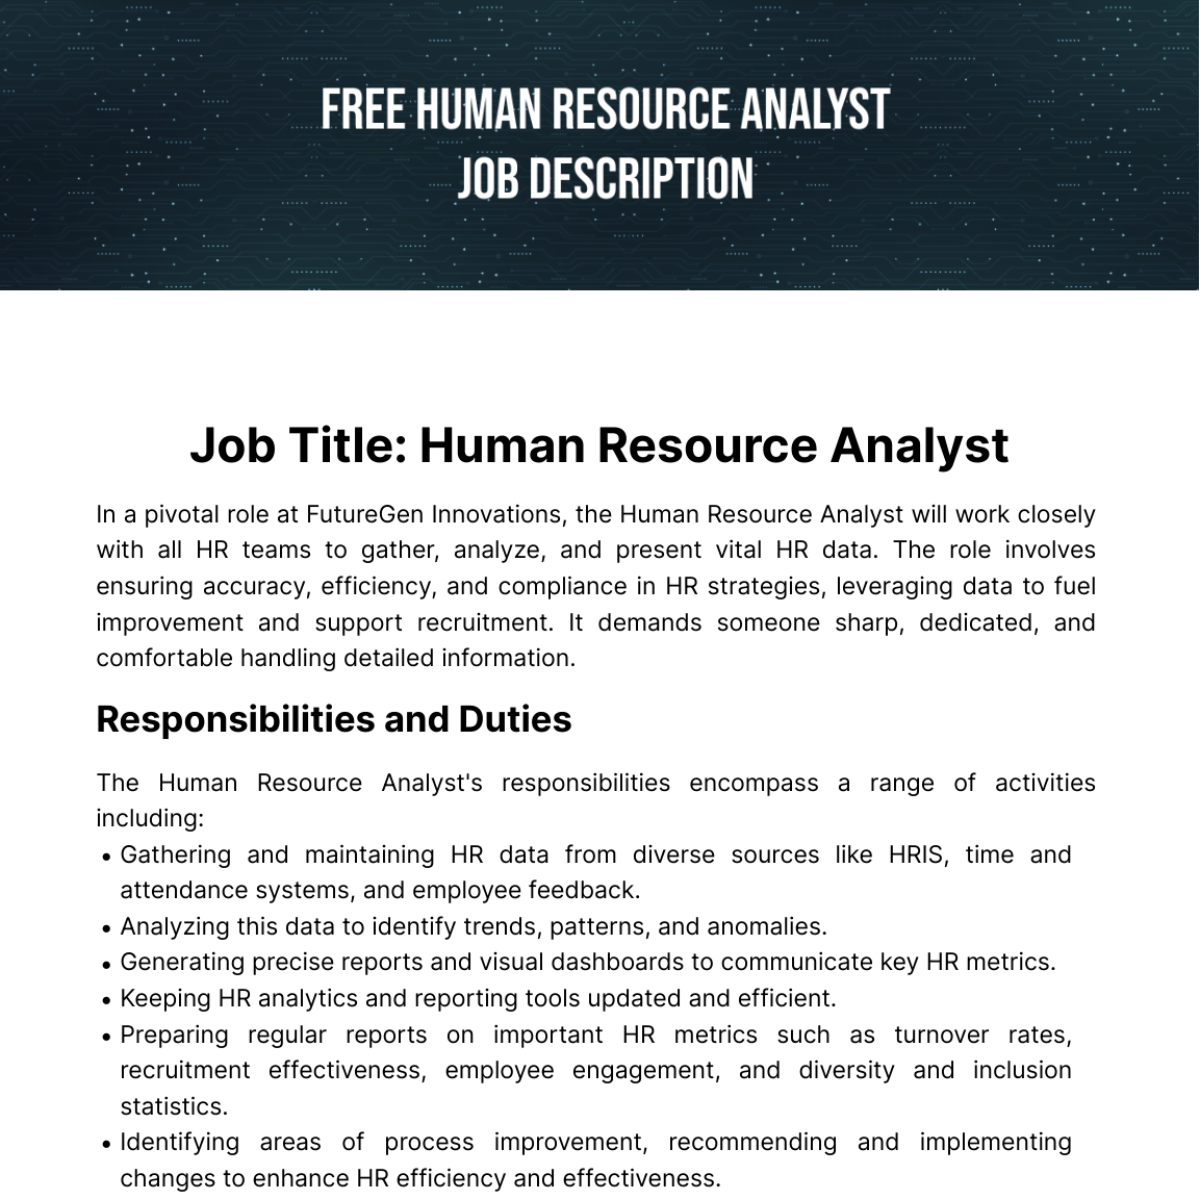 Human Resource Analyst Job Description Template